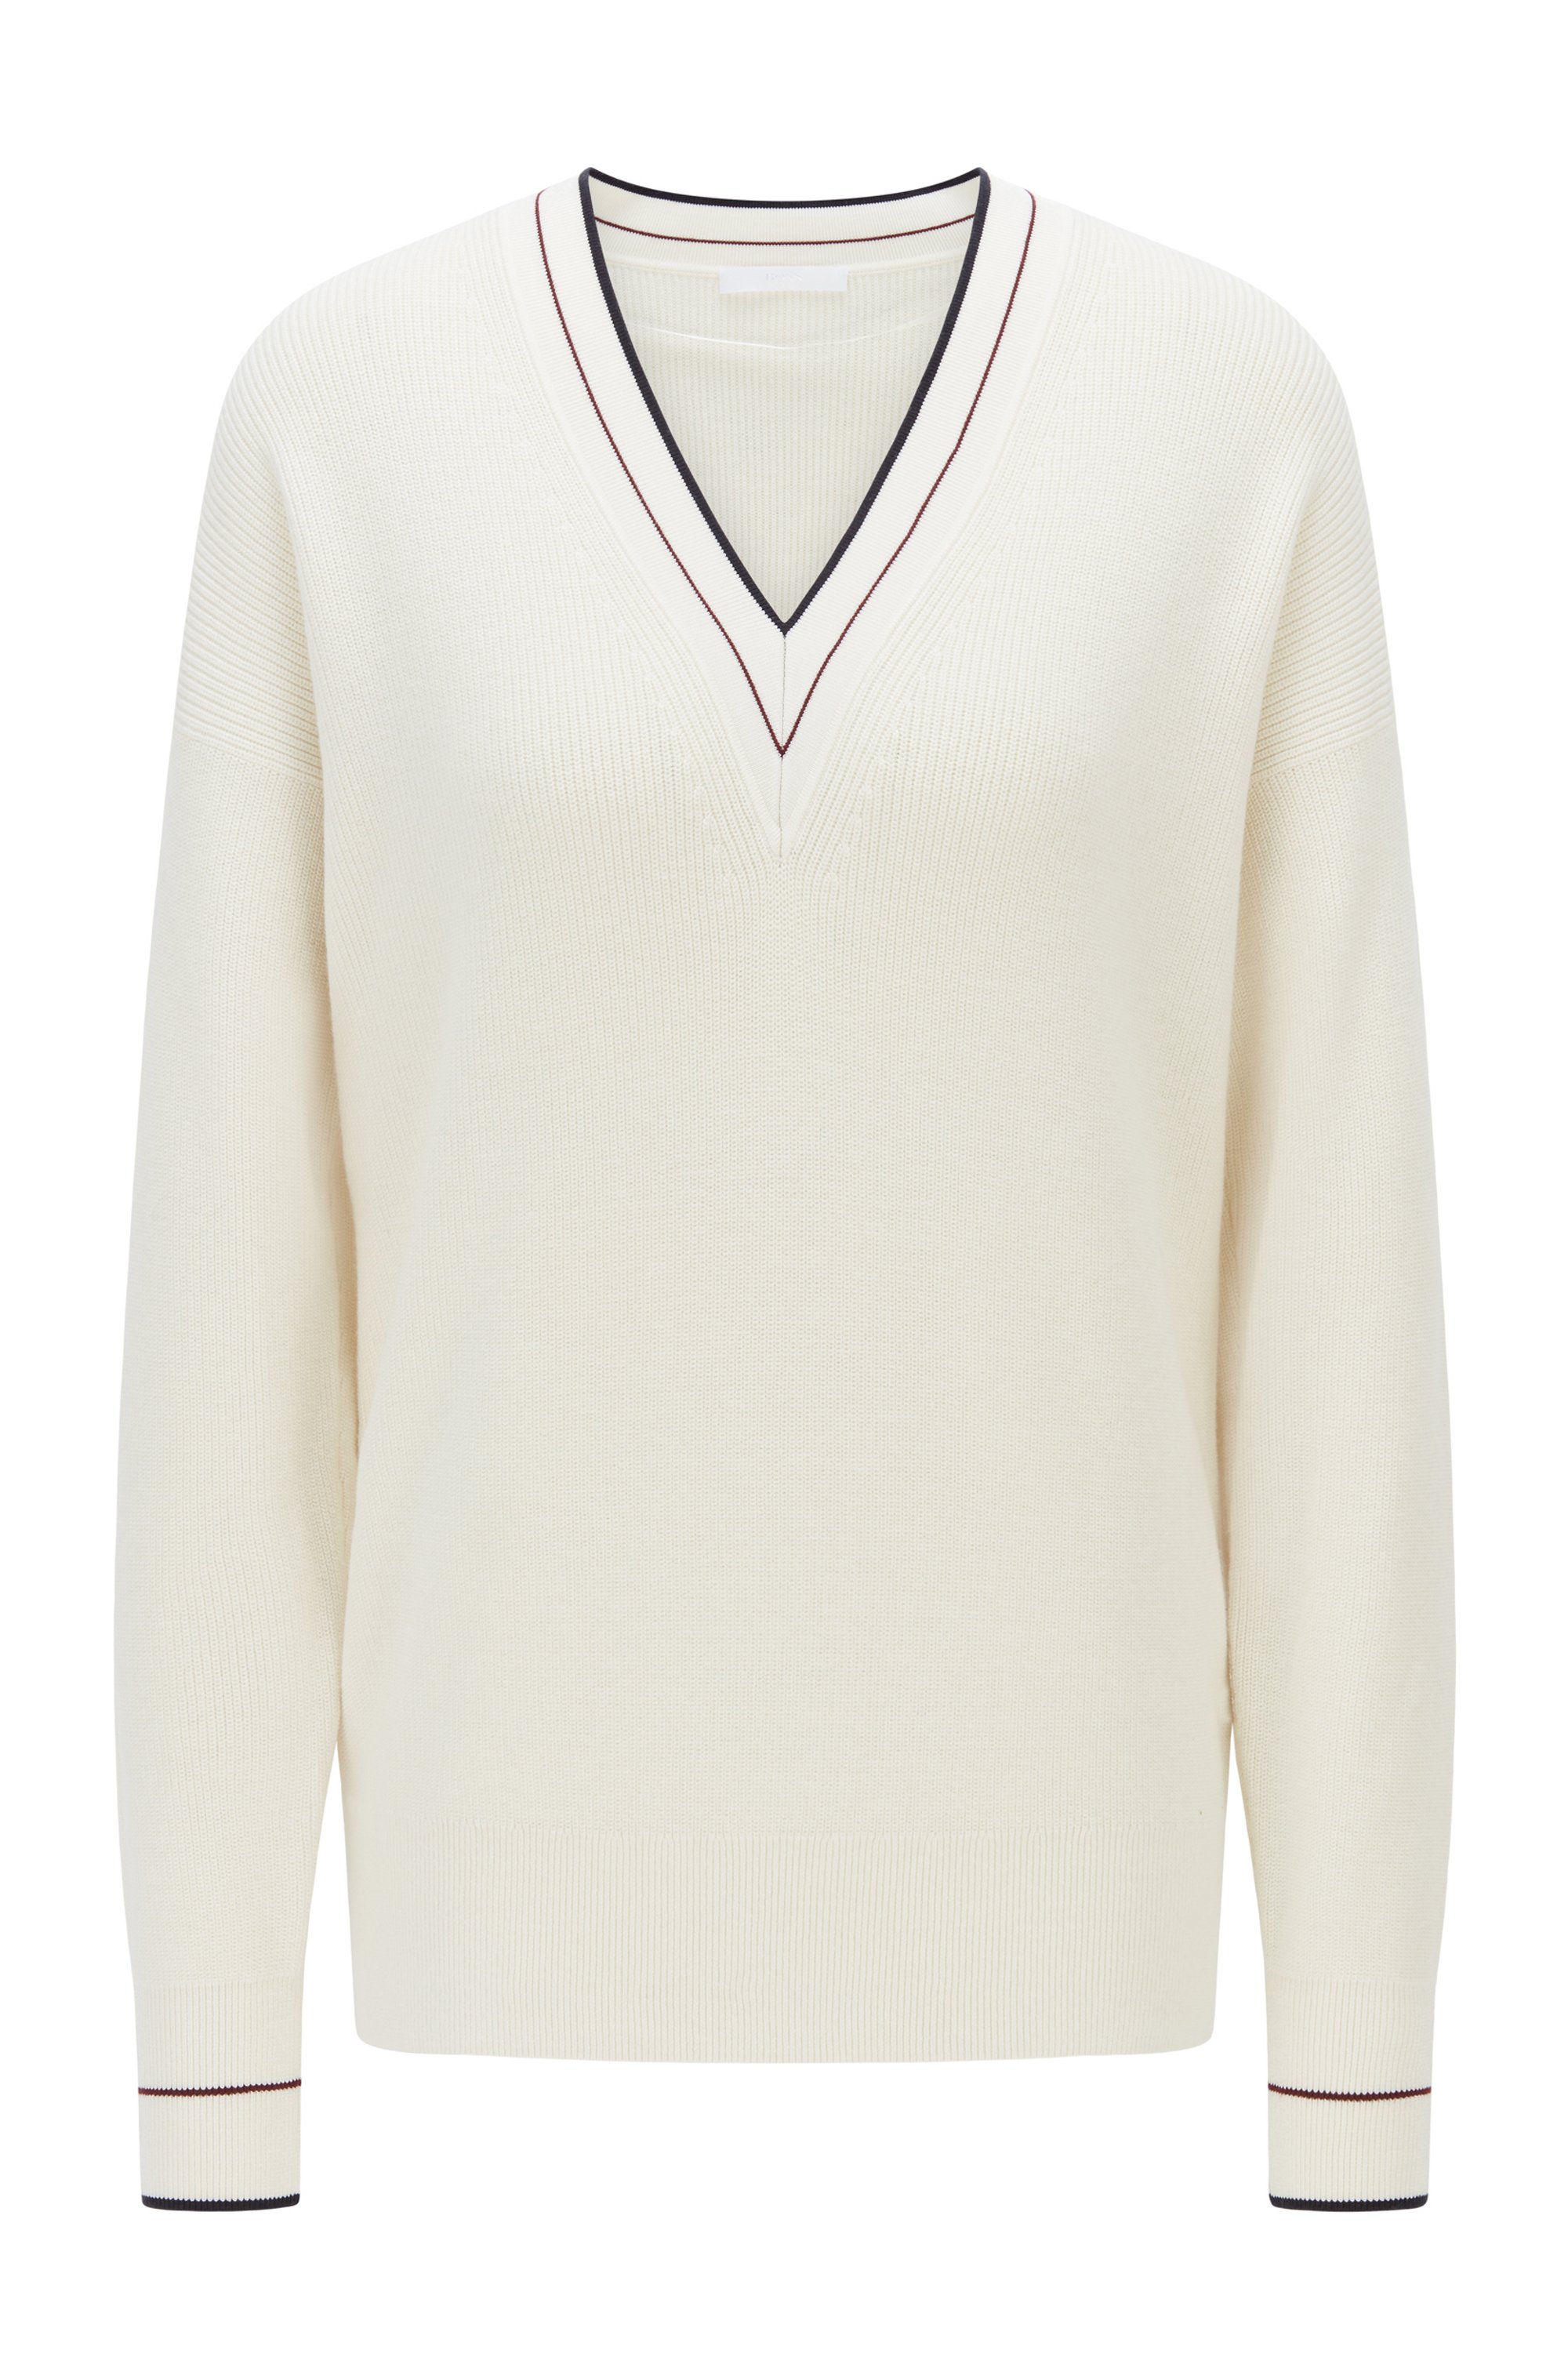 V-neck sweater in cotton, silk and cashmere, White